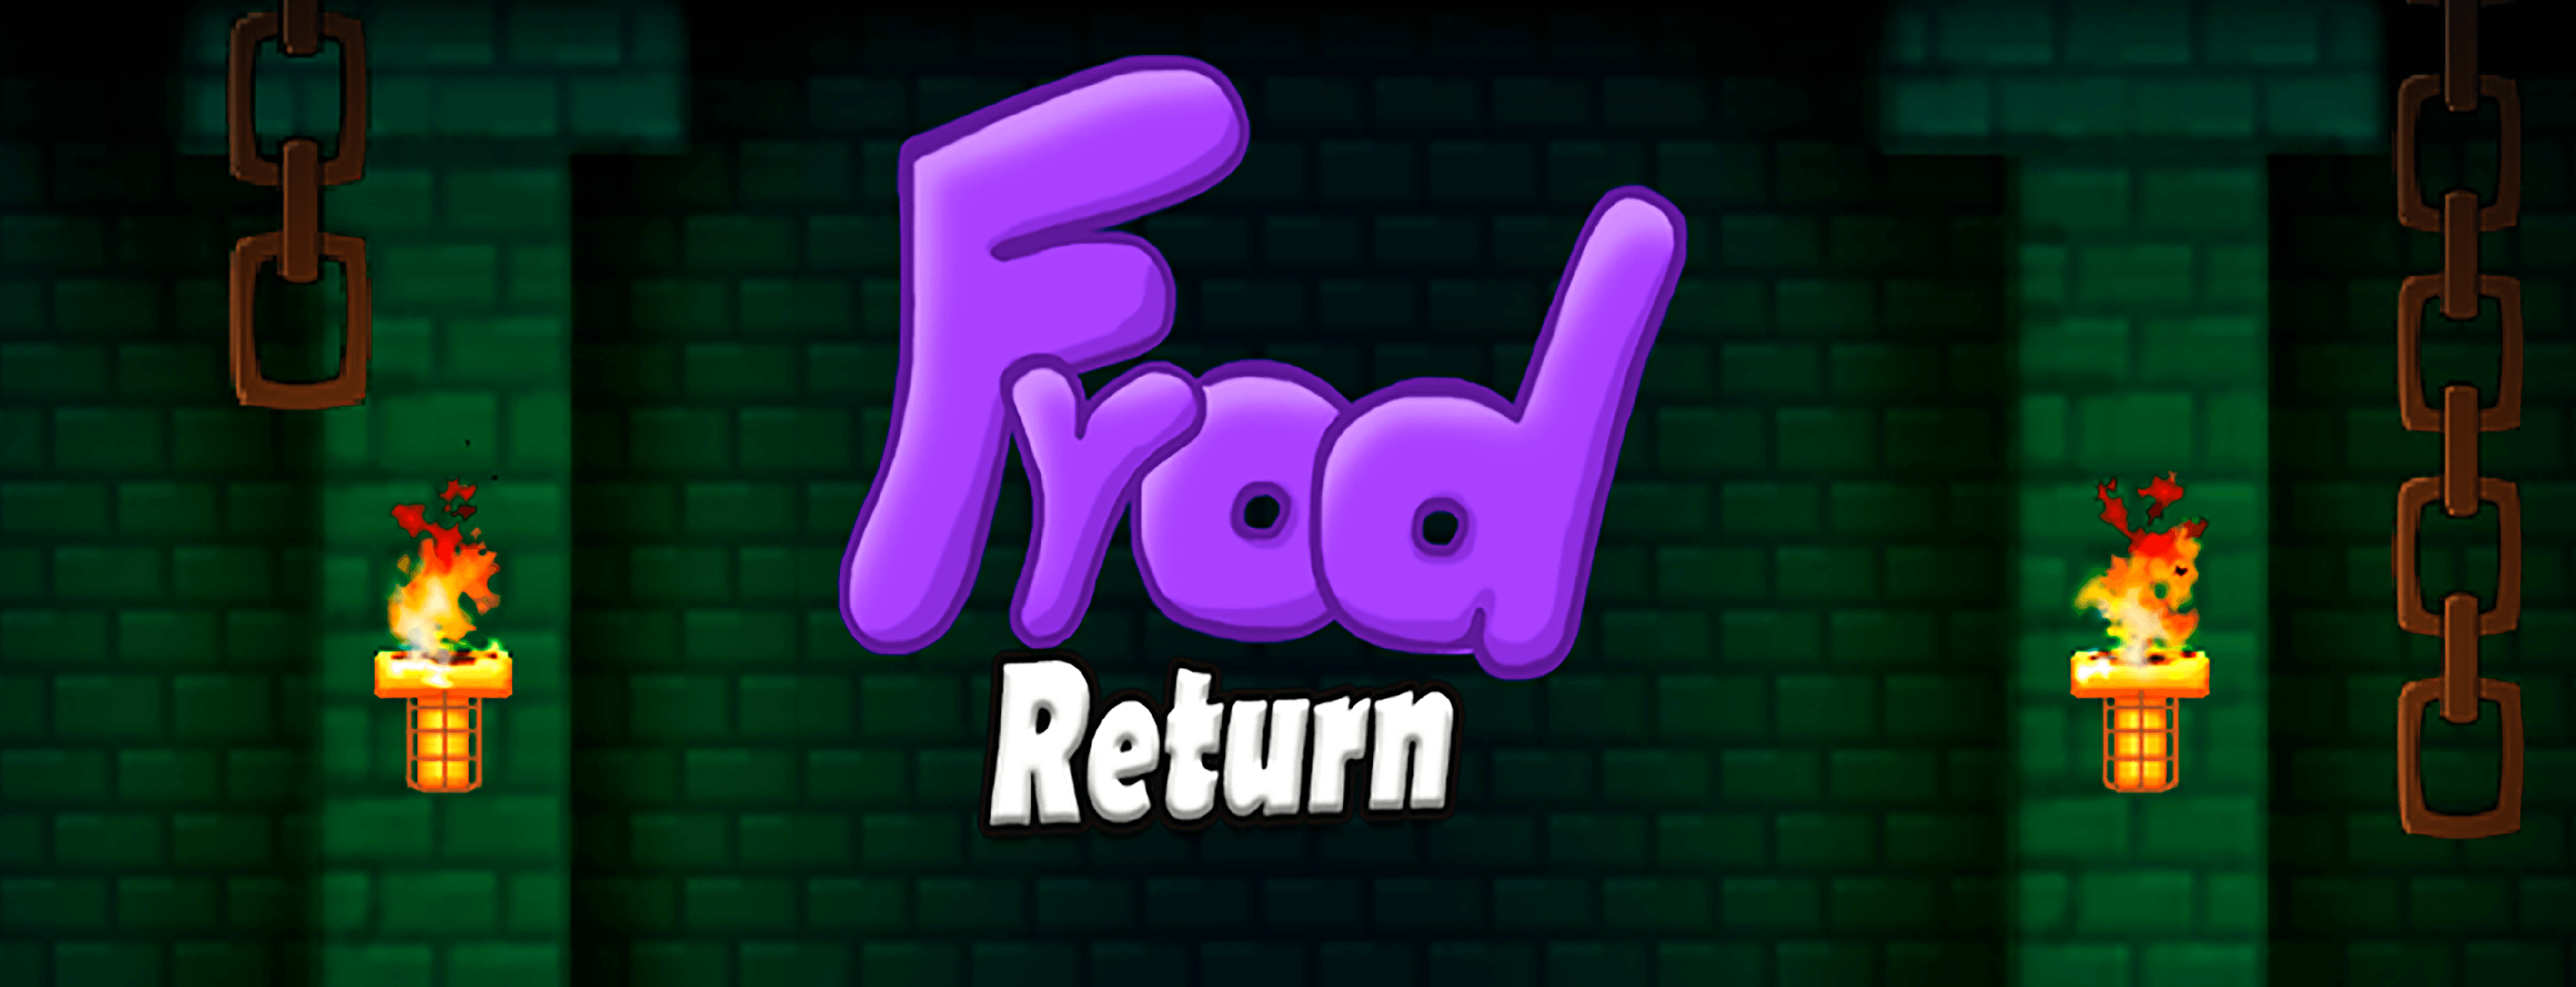 Frod Return